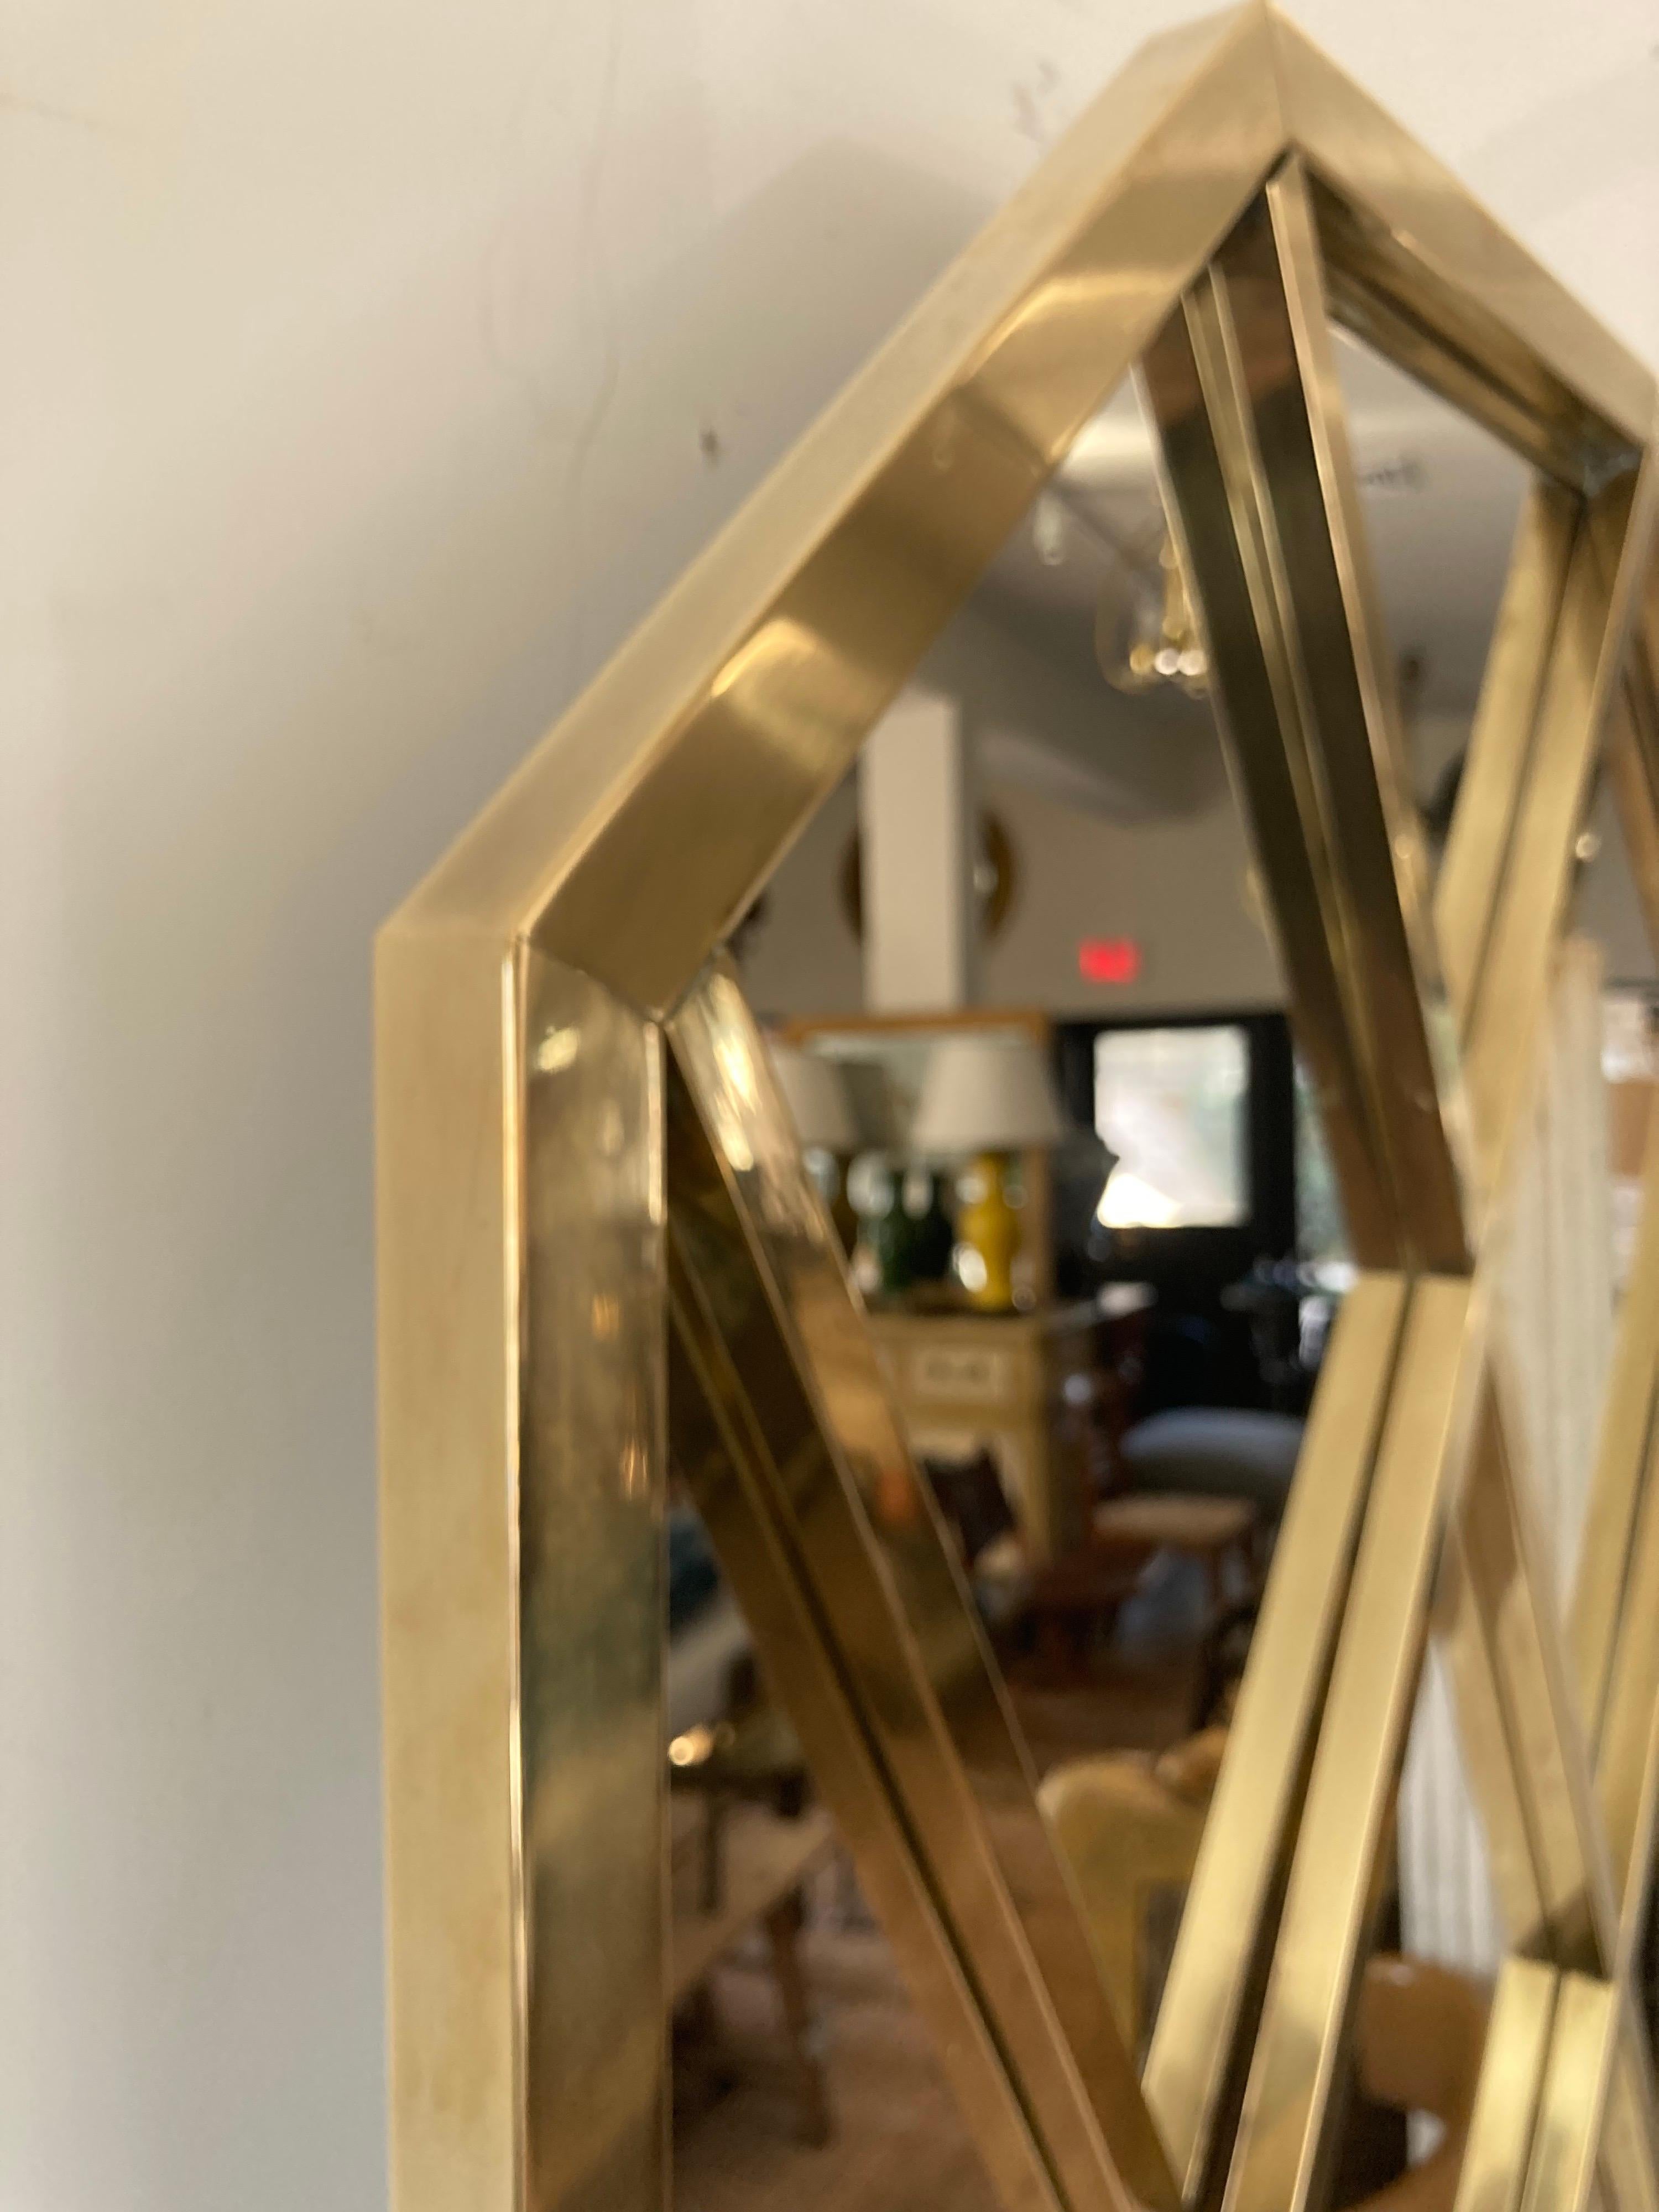 Lattice framed brass mirror. Interesting criss-cross patterned brass frame.